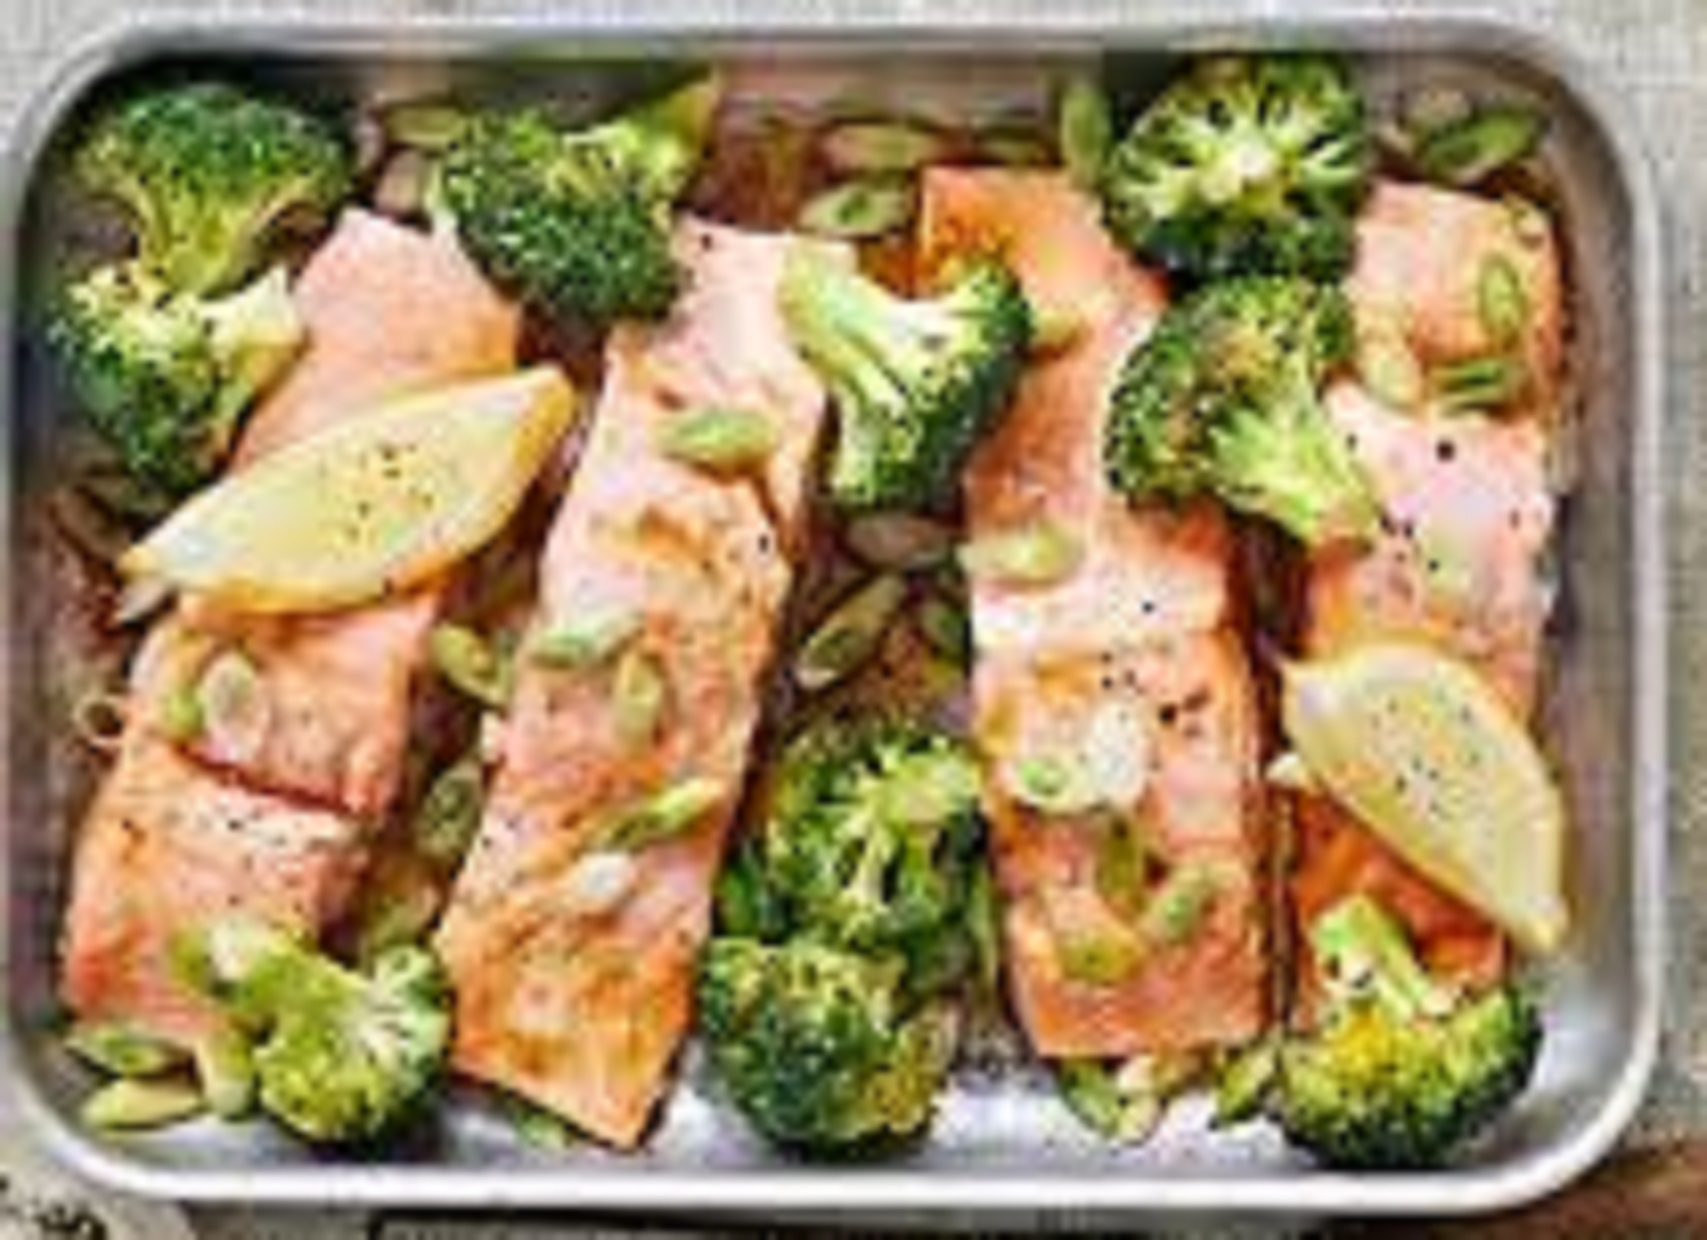 Soy salmon & broccoli traybake